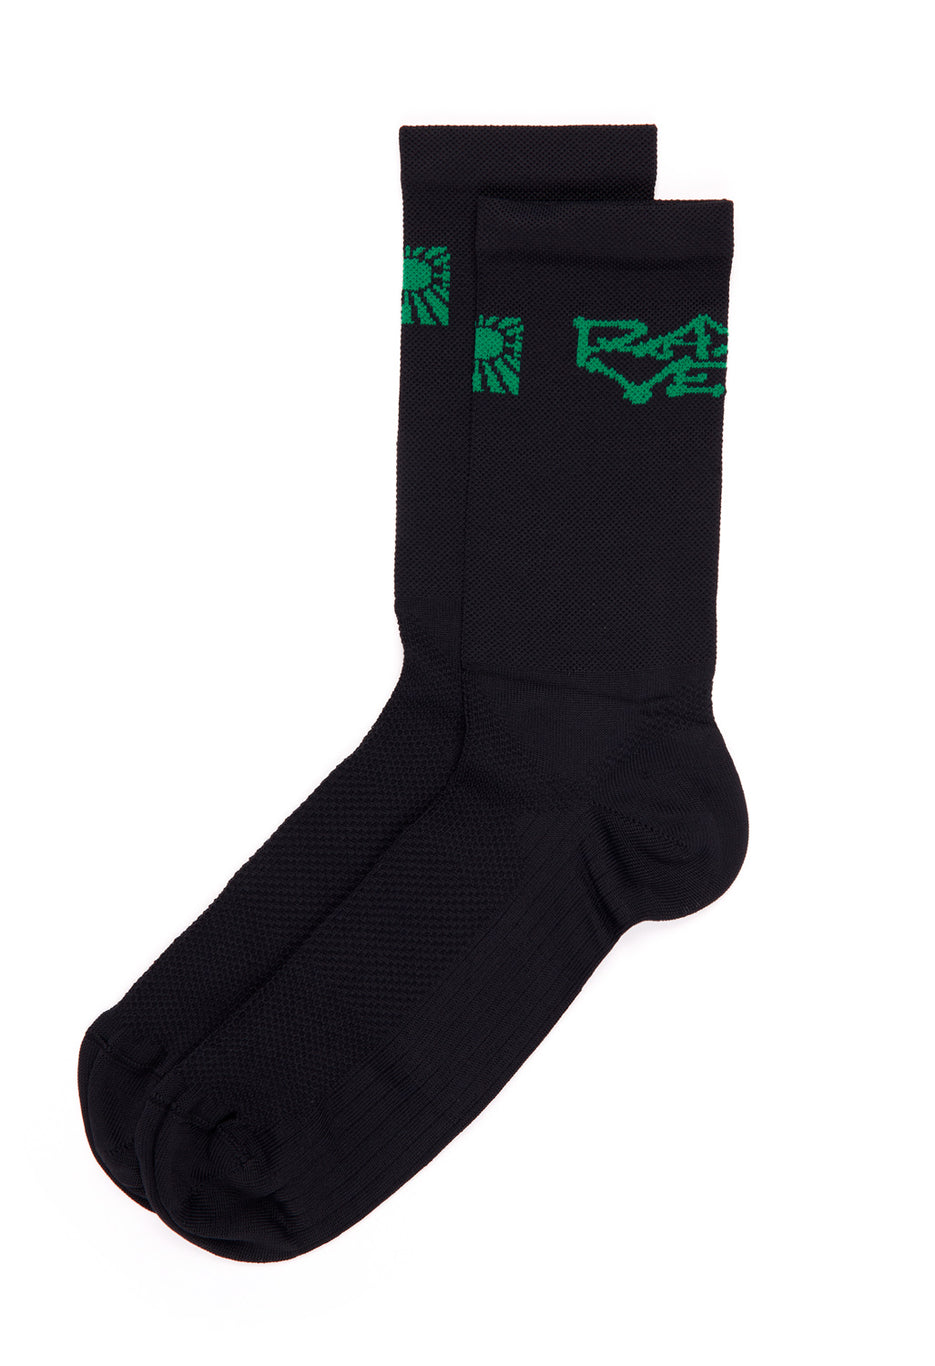 Rayon Vert Men's Problems Socks - Golgotha Black